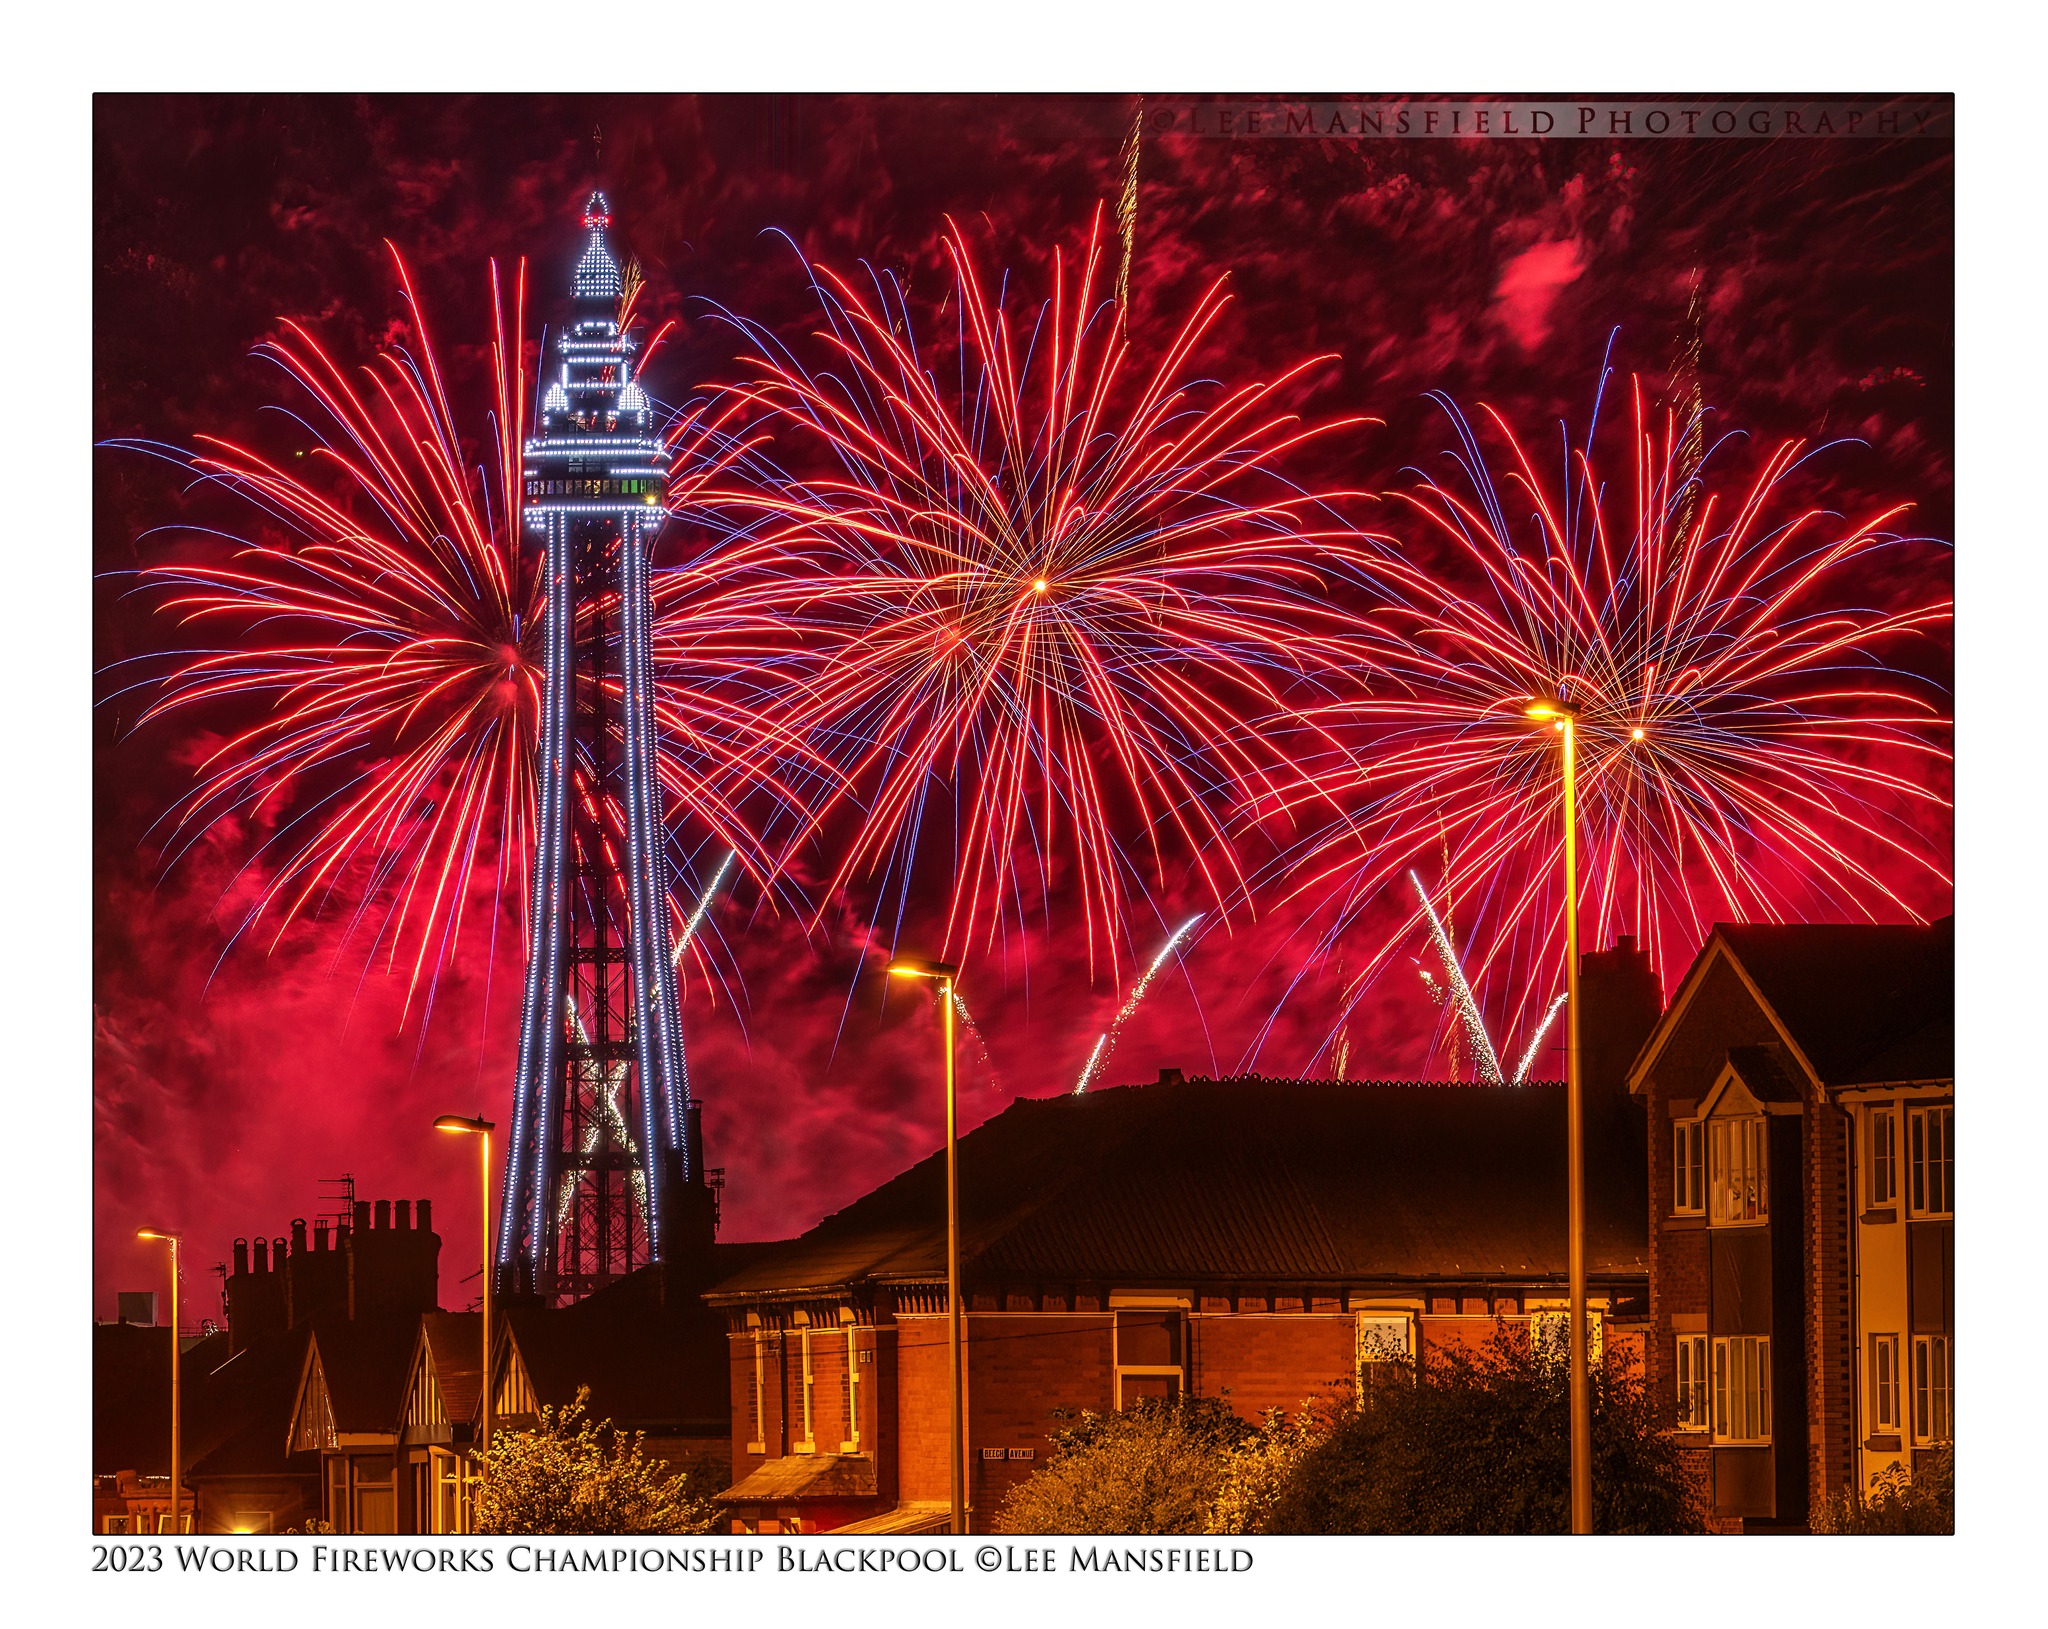 2023 World Fireworks Championship Blackpool [India] 6 - Lee Mansfield